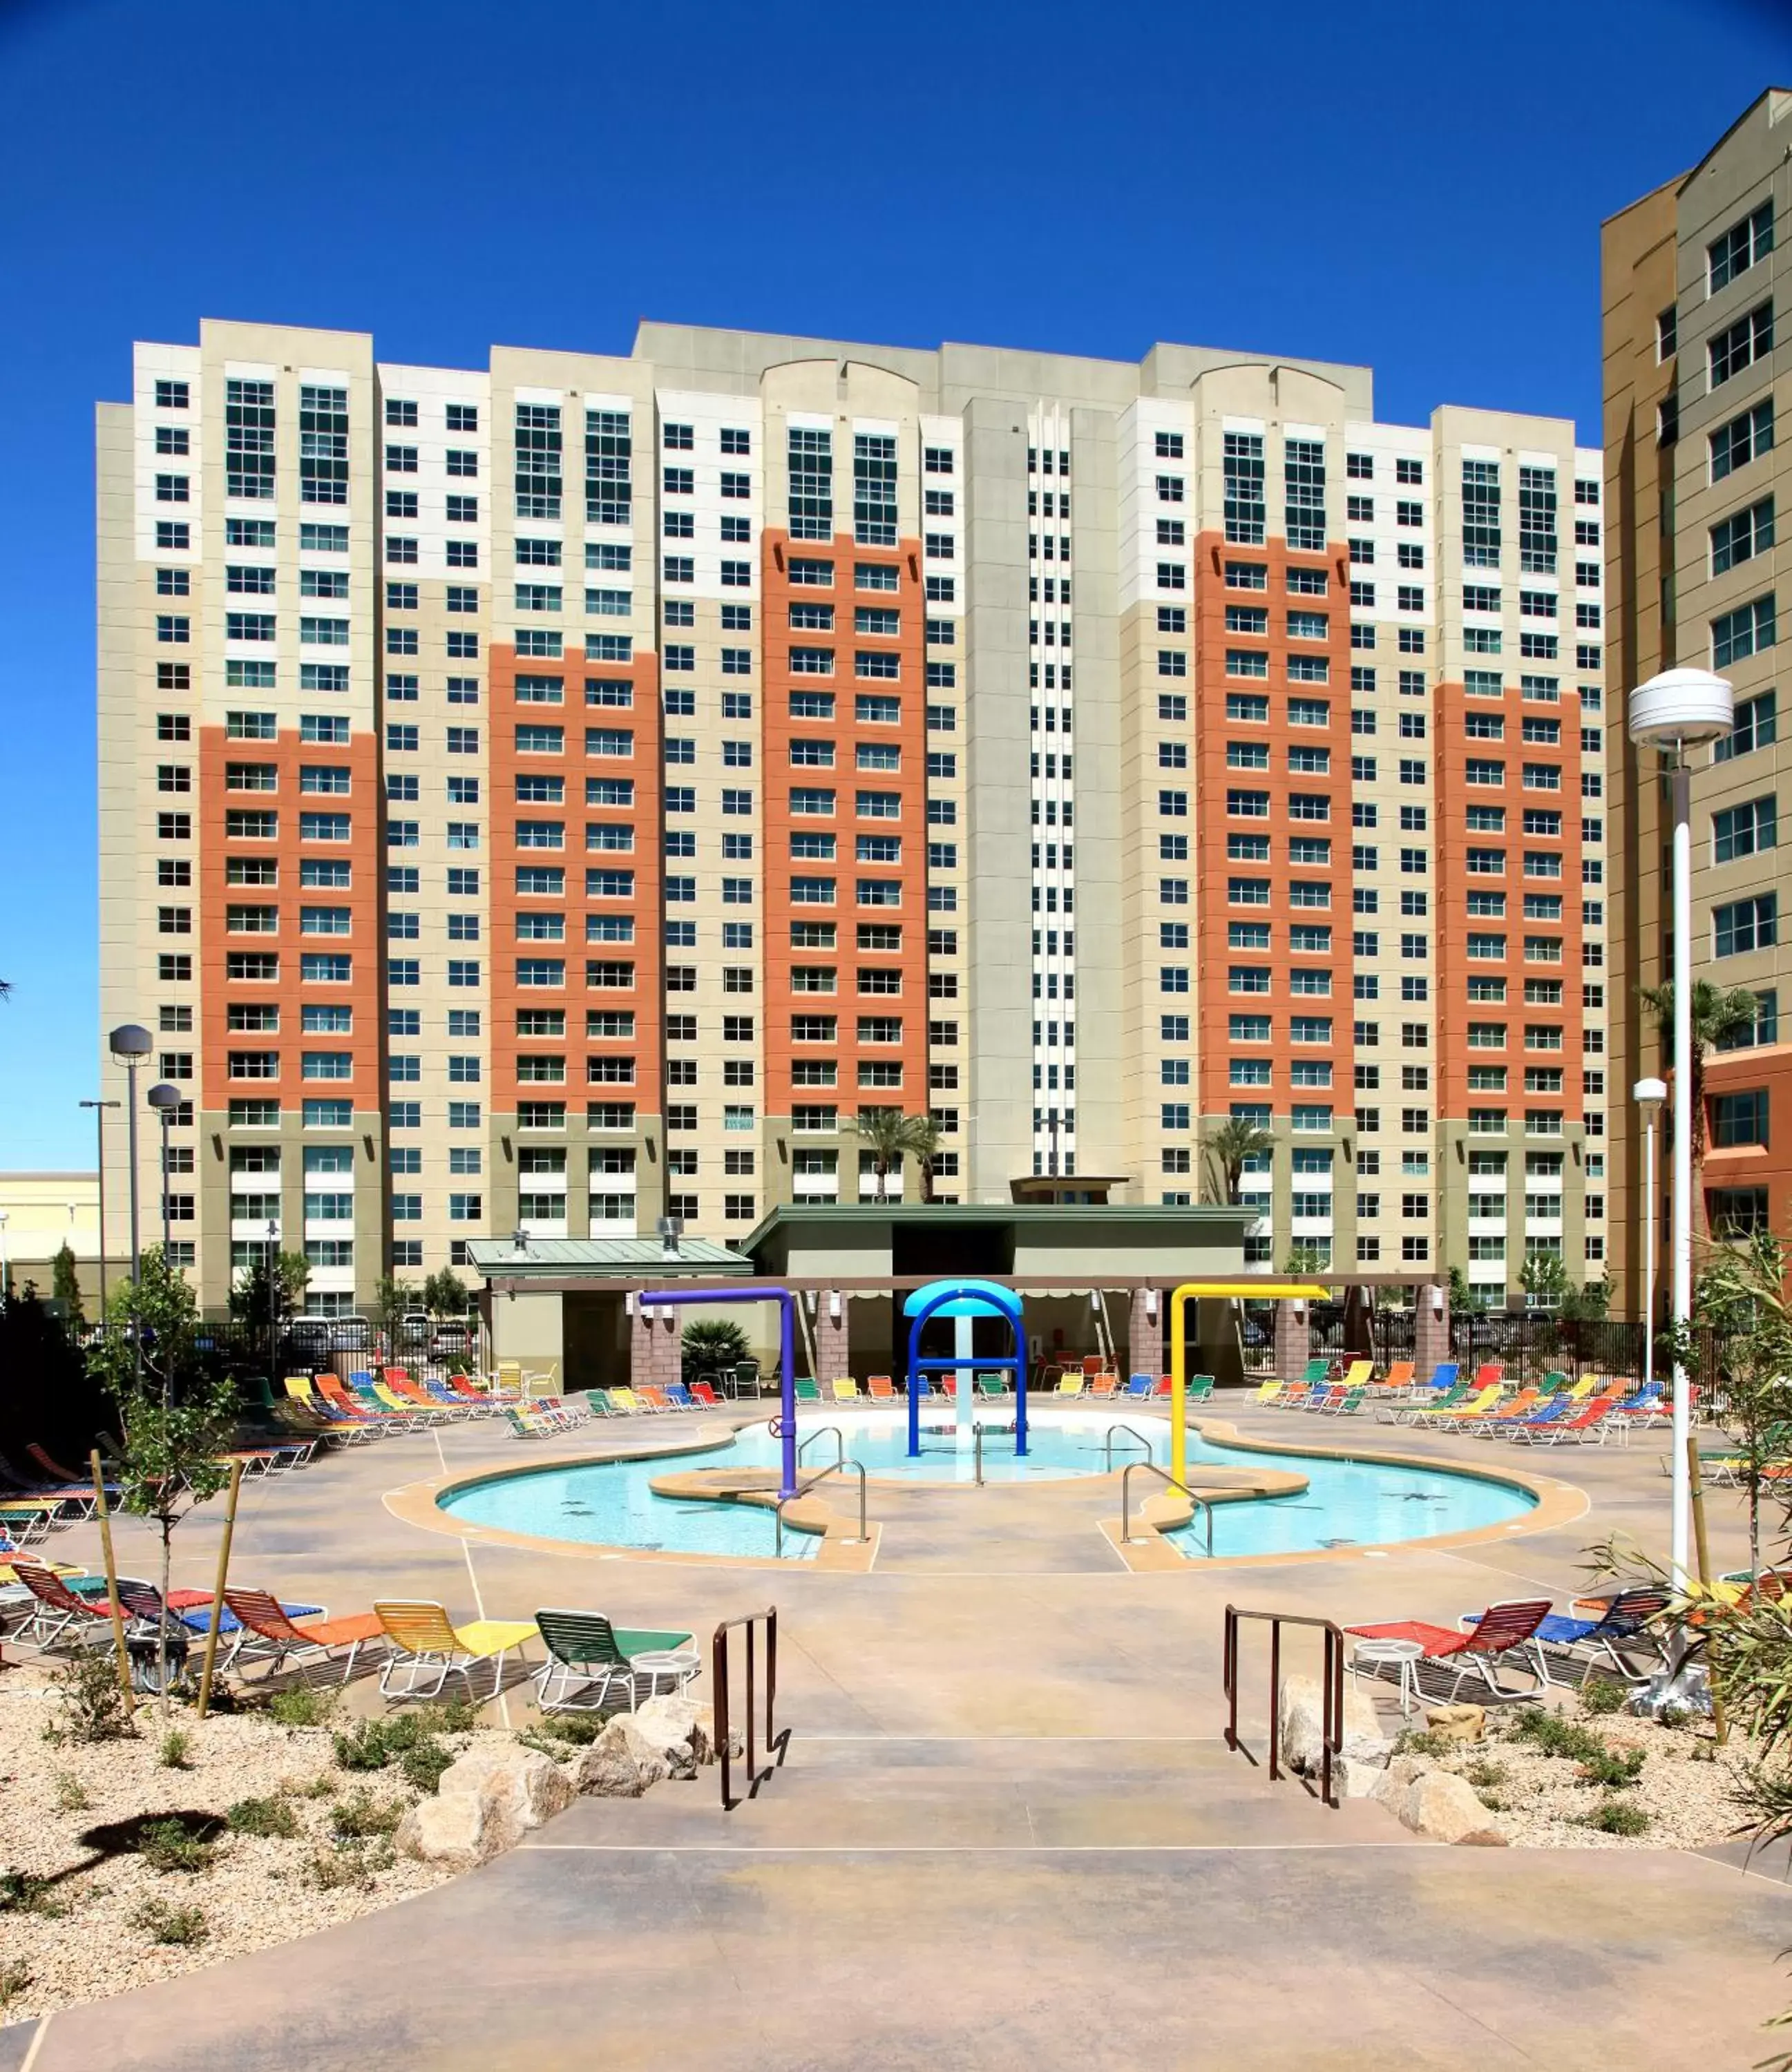 Nearby landmark, Swimming Pool in The Grandview at Las Vegas